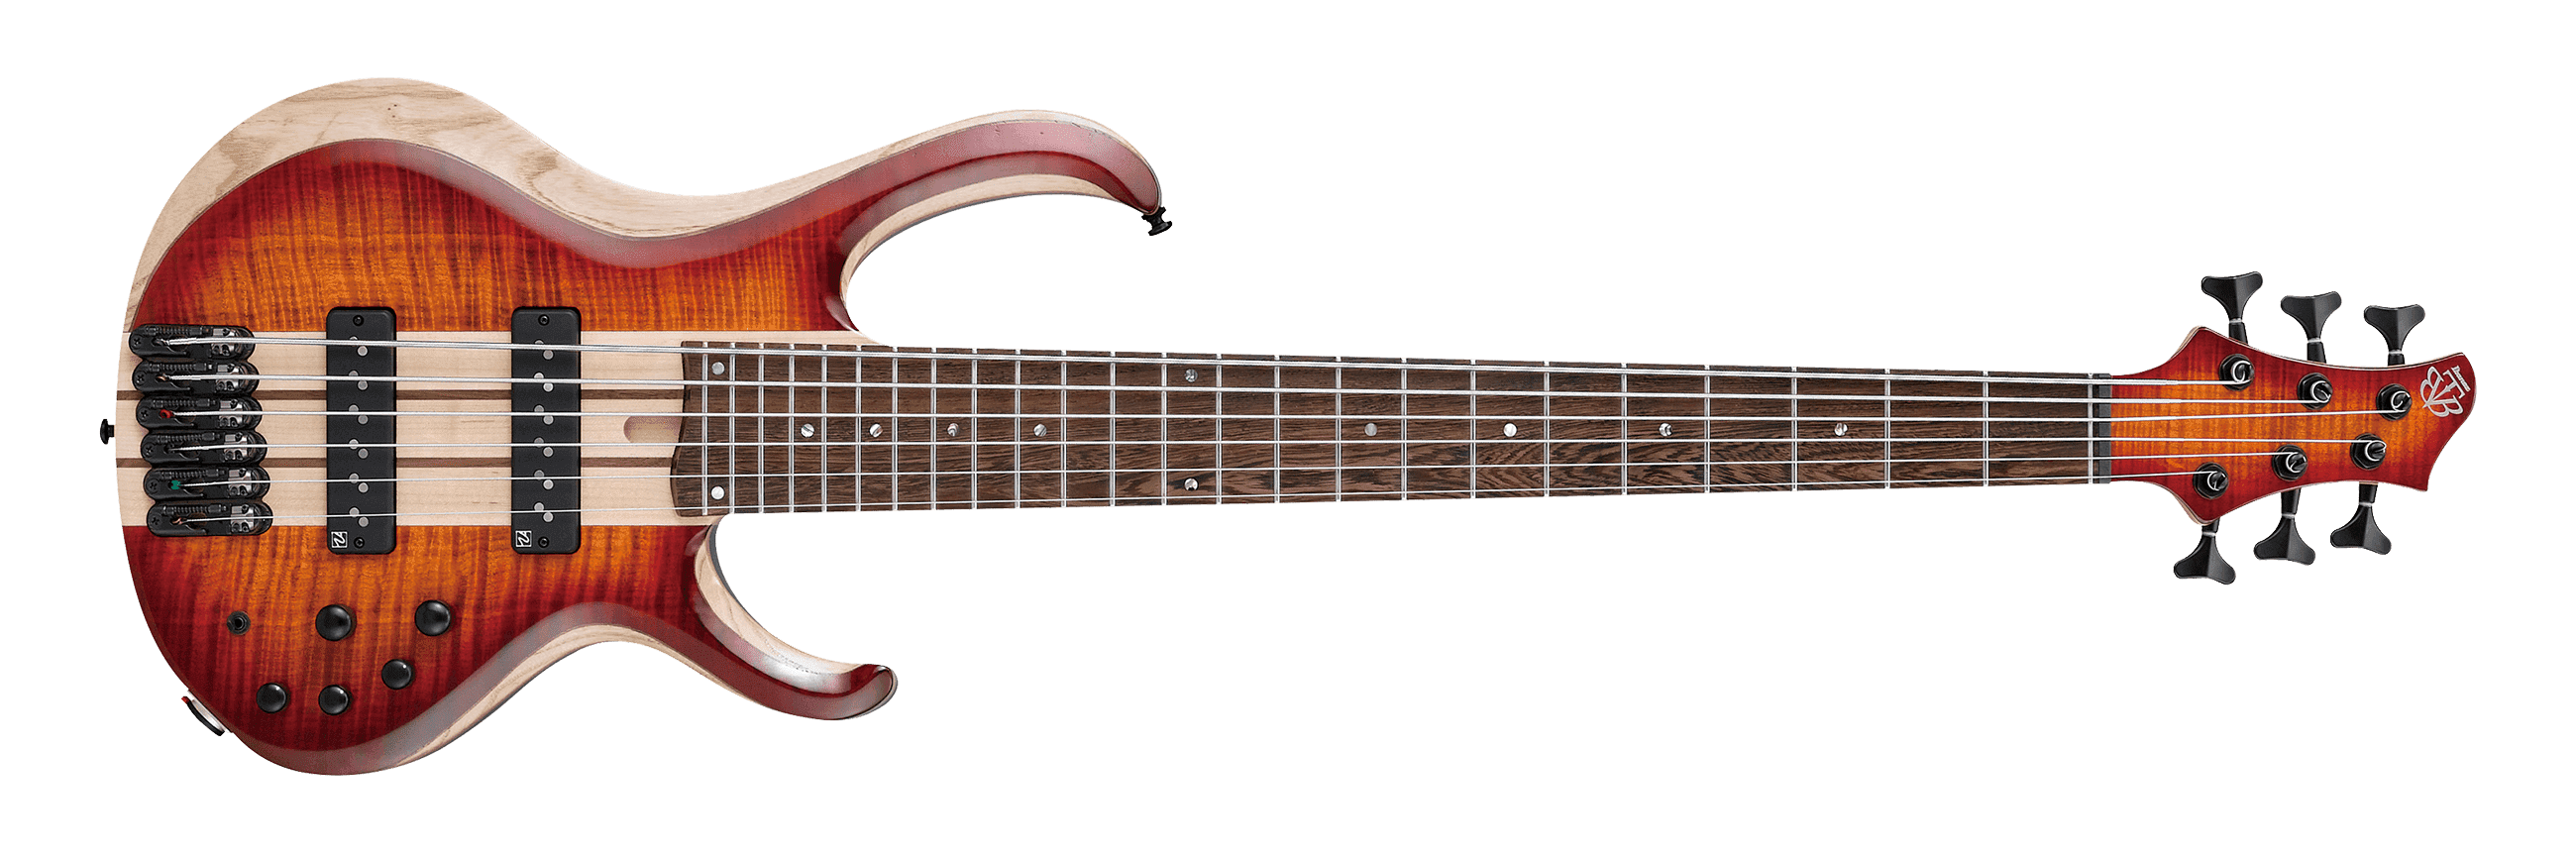 Ibanez BTB20TH6 BTB 6-String Bass Guitar 